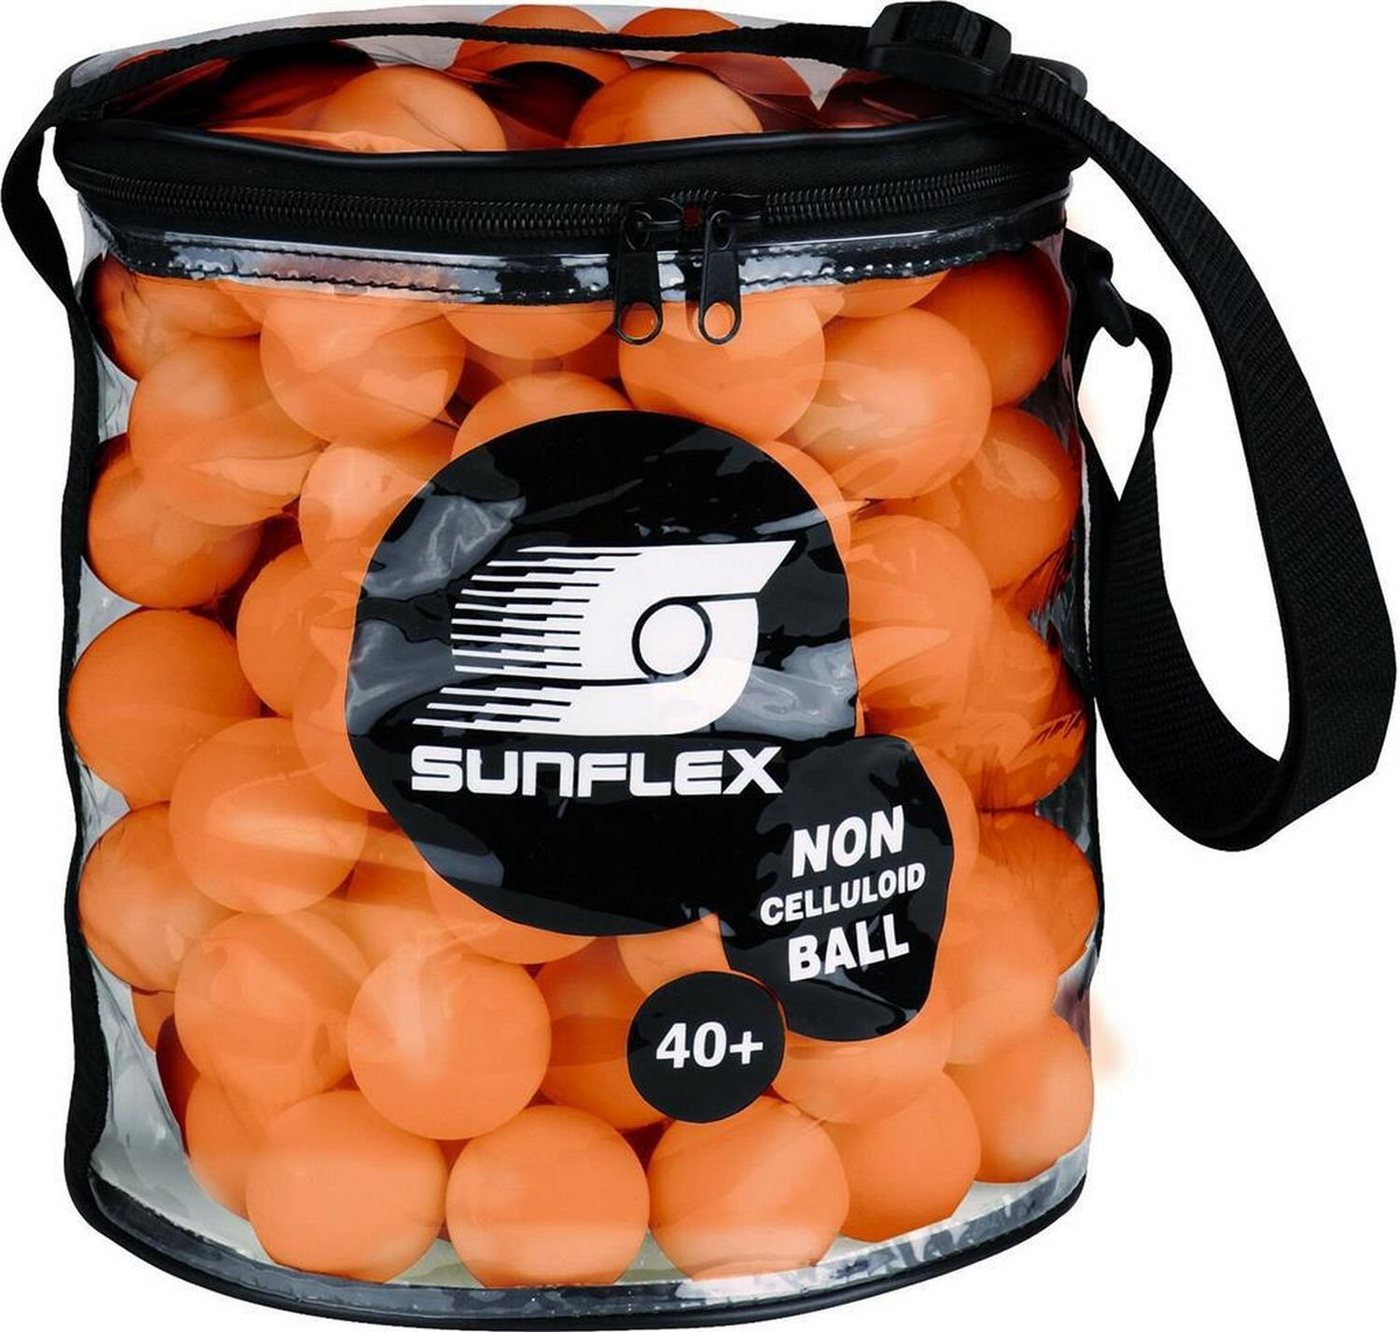 Sunflex Tischtennisball Balltasche inkl. 144 Tischtennisbälle 40+ orange, Tischtennis Bälle Tischtennisball Ball Balls von Sunflex